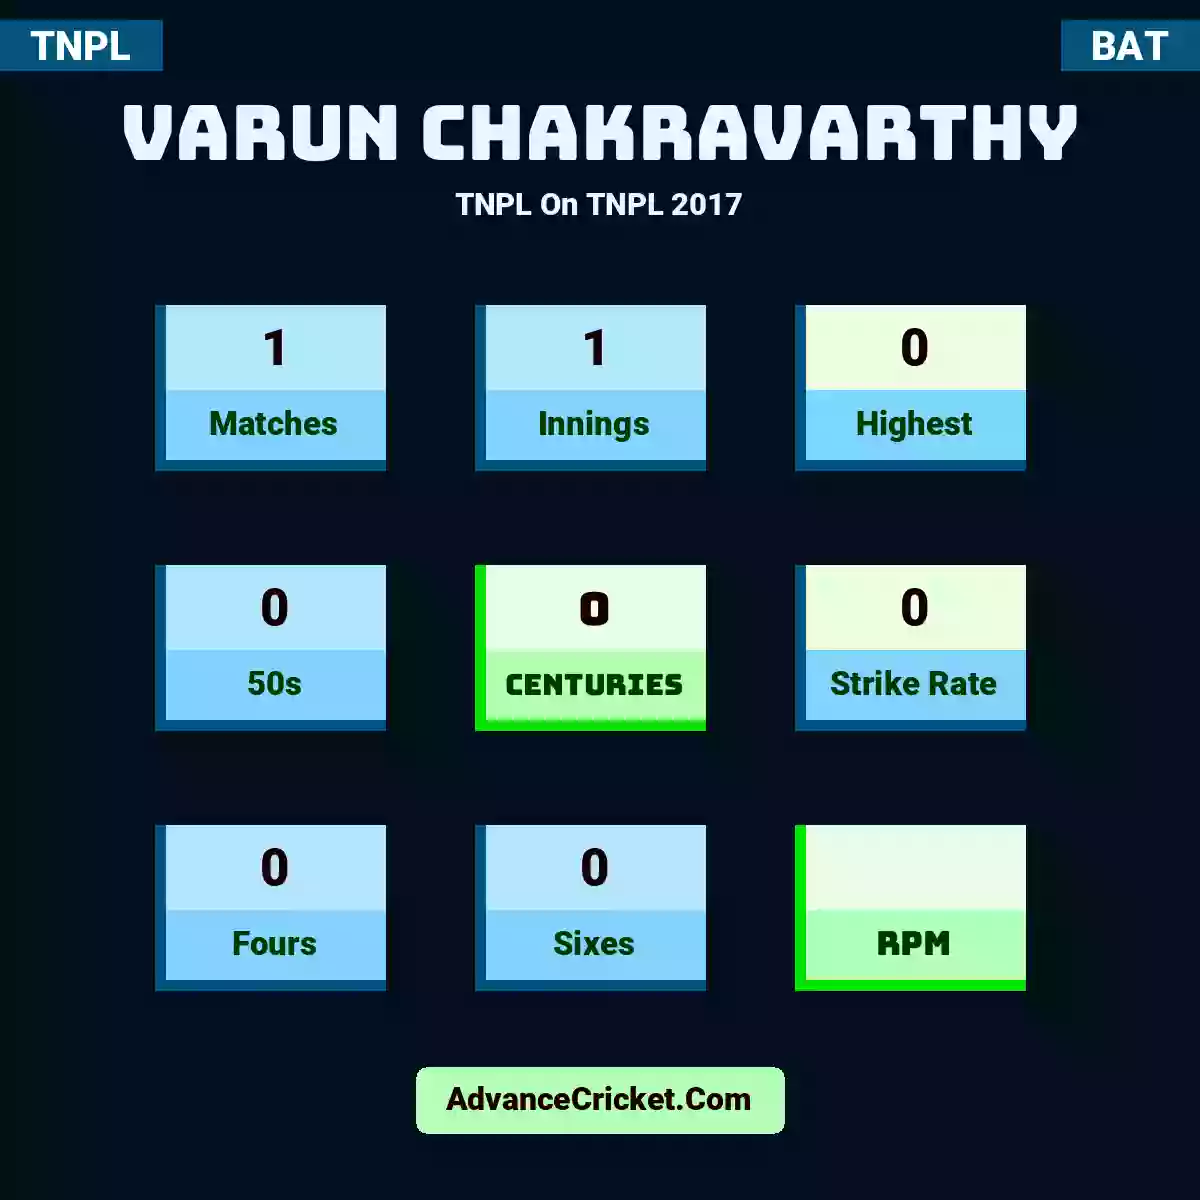 Varun Chakravarthy TNPL  On TNPL 2017, Varun Chakravarthy played 1 matches, scored 0 runs as highest, 0 half-centuries, and 0 centuries, with a strike rate of 0. V.Chakravarthy hit 0 fours and 0 sixes.